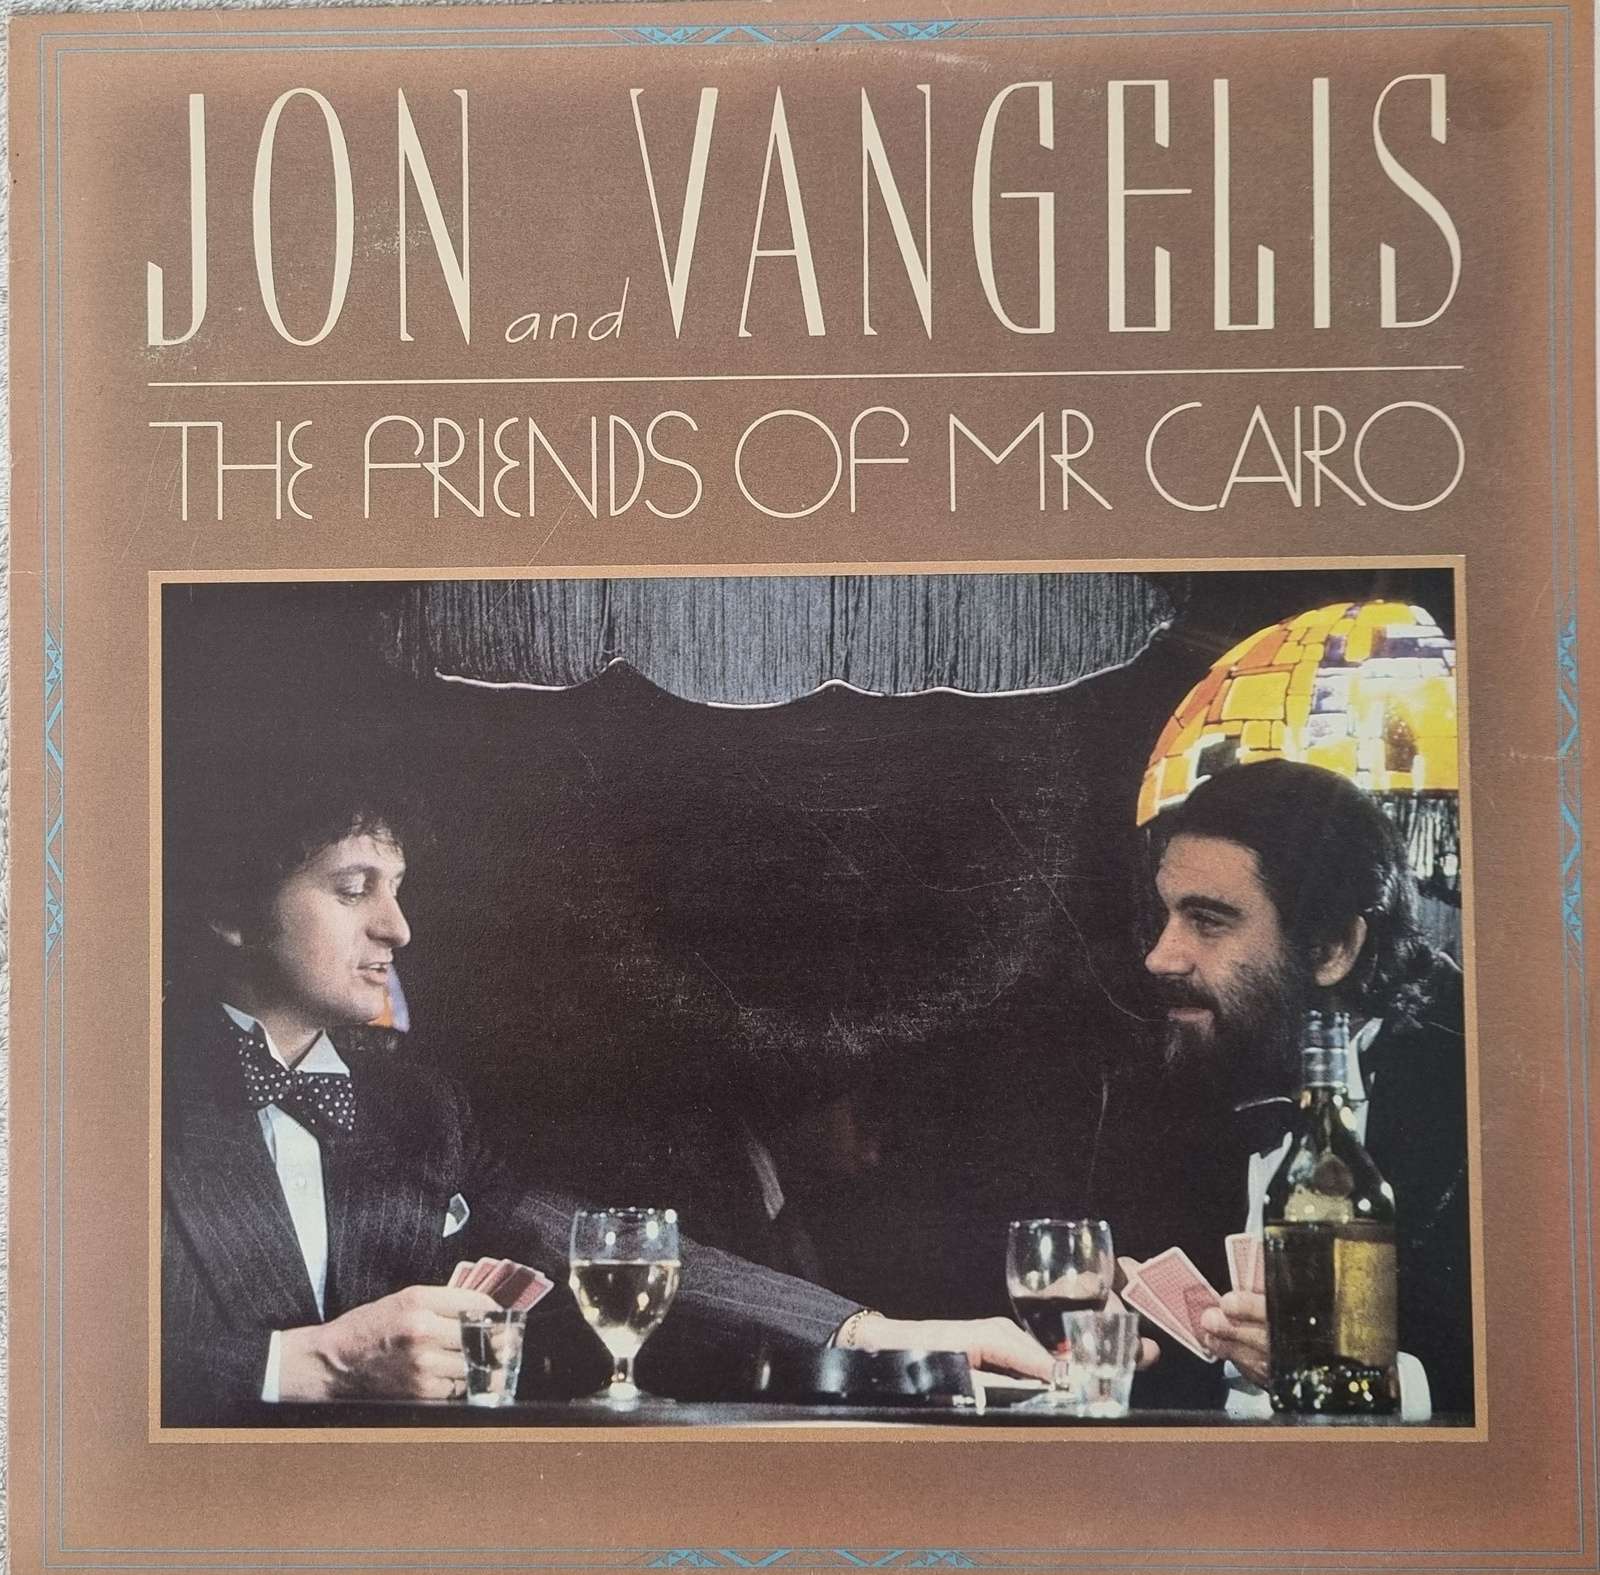 Jon and Vangelis - The Friends of Mr. Cairo (LP)